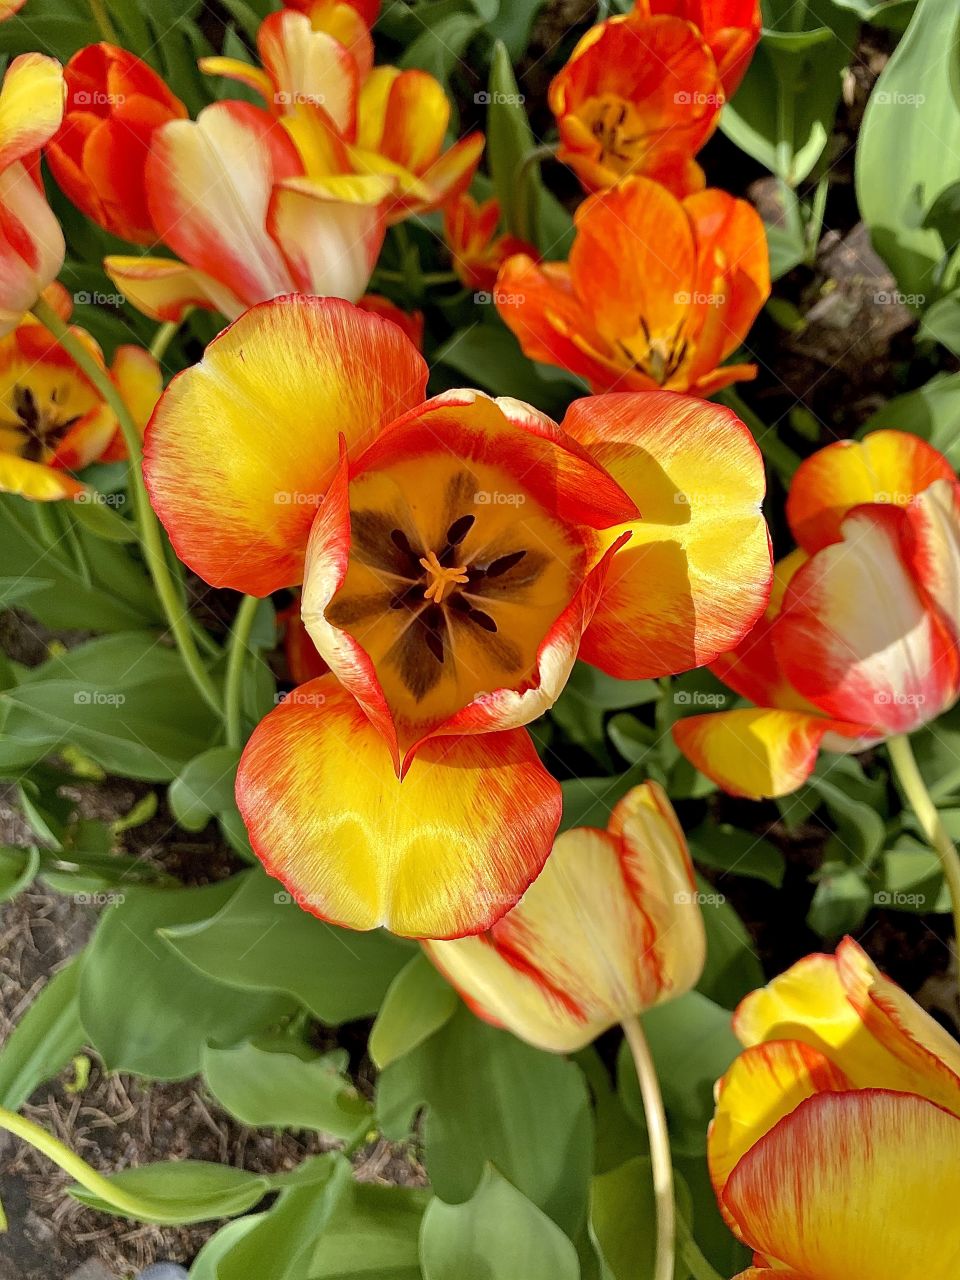 Stunning orange and red tulips in circular patterns! 